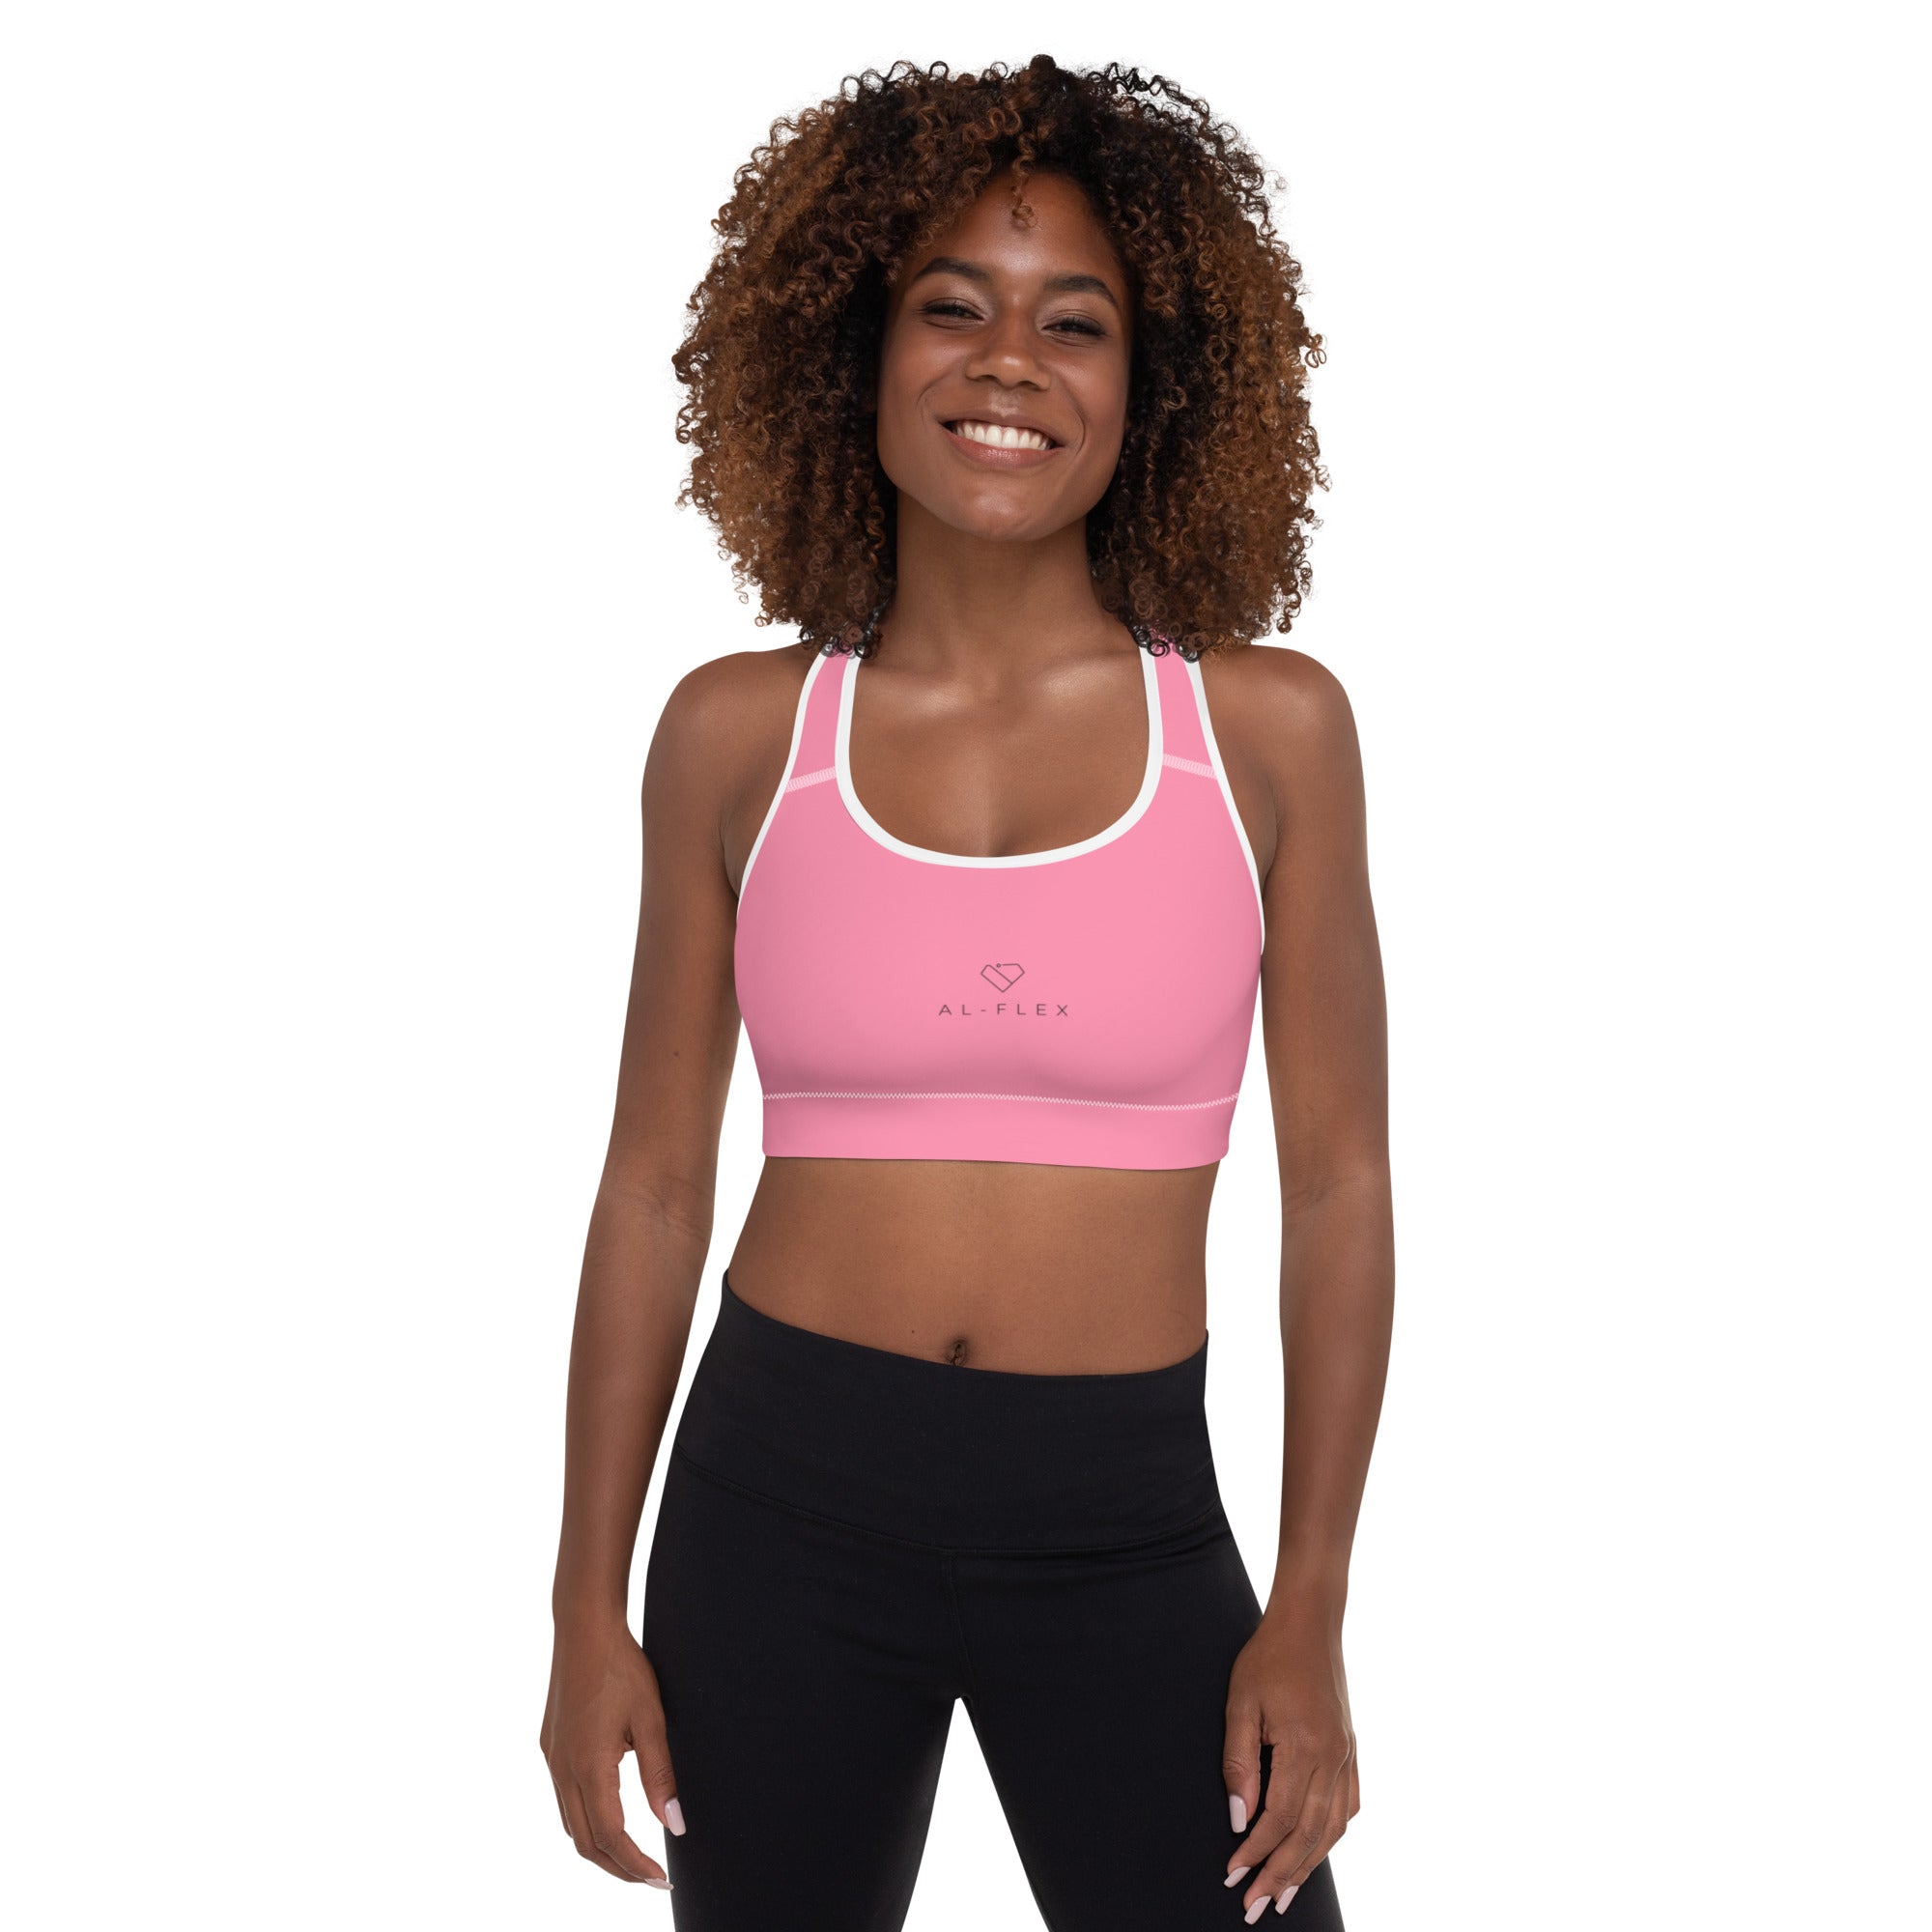 Alphalete Vault Sports Bra Pink Size XL - $30 (42% Off Retail